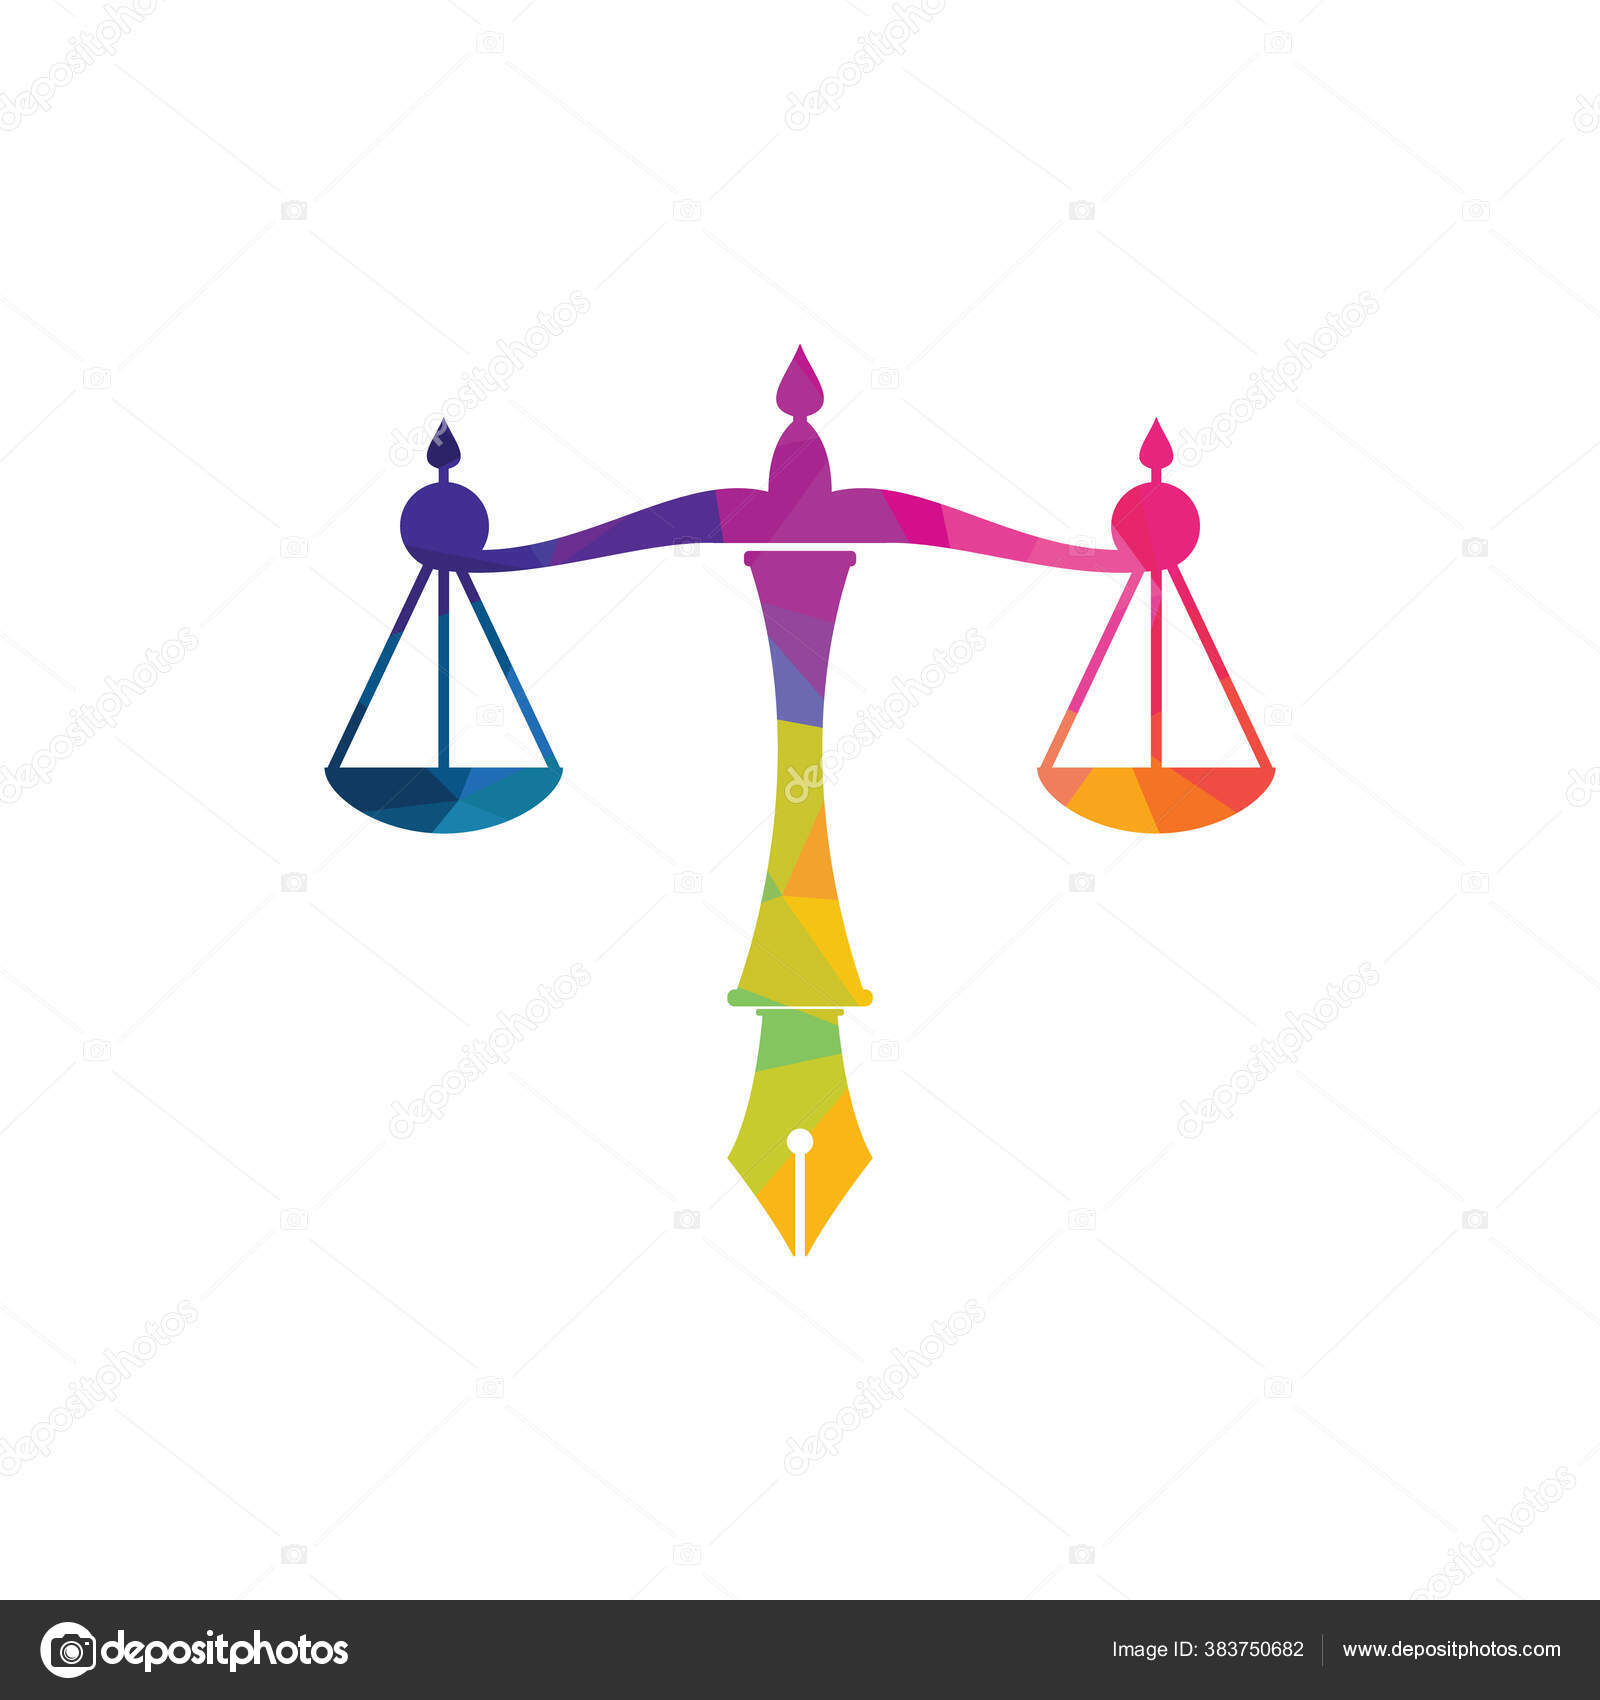 872 Judicial System Emblems Images, Stock Photos & Vectors | Shutterstock